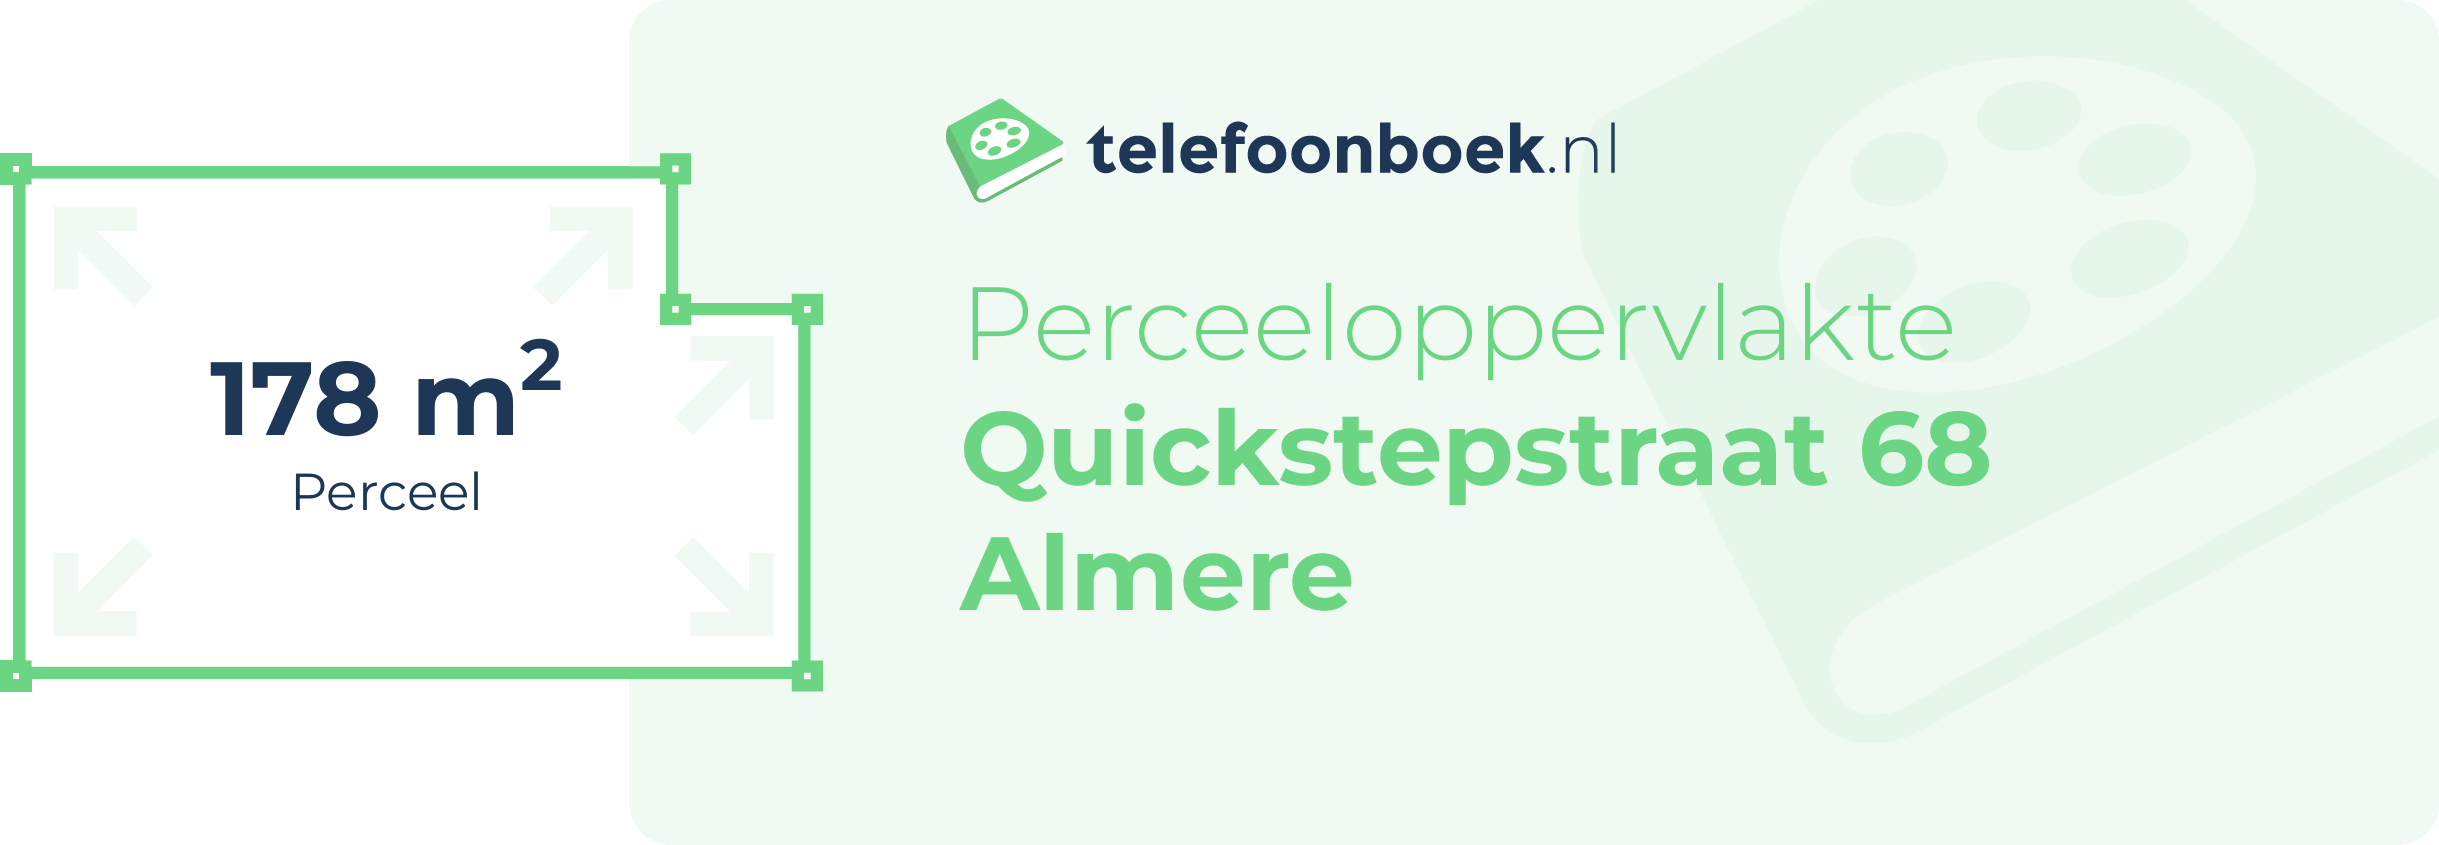 Perceeloppervlakte Quickstepstraat 68 Almere